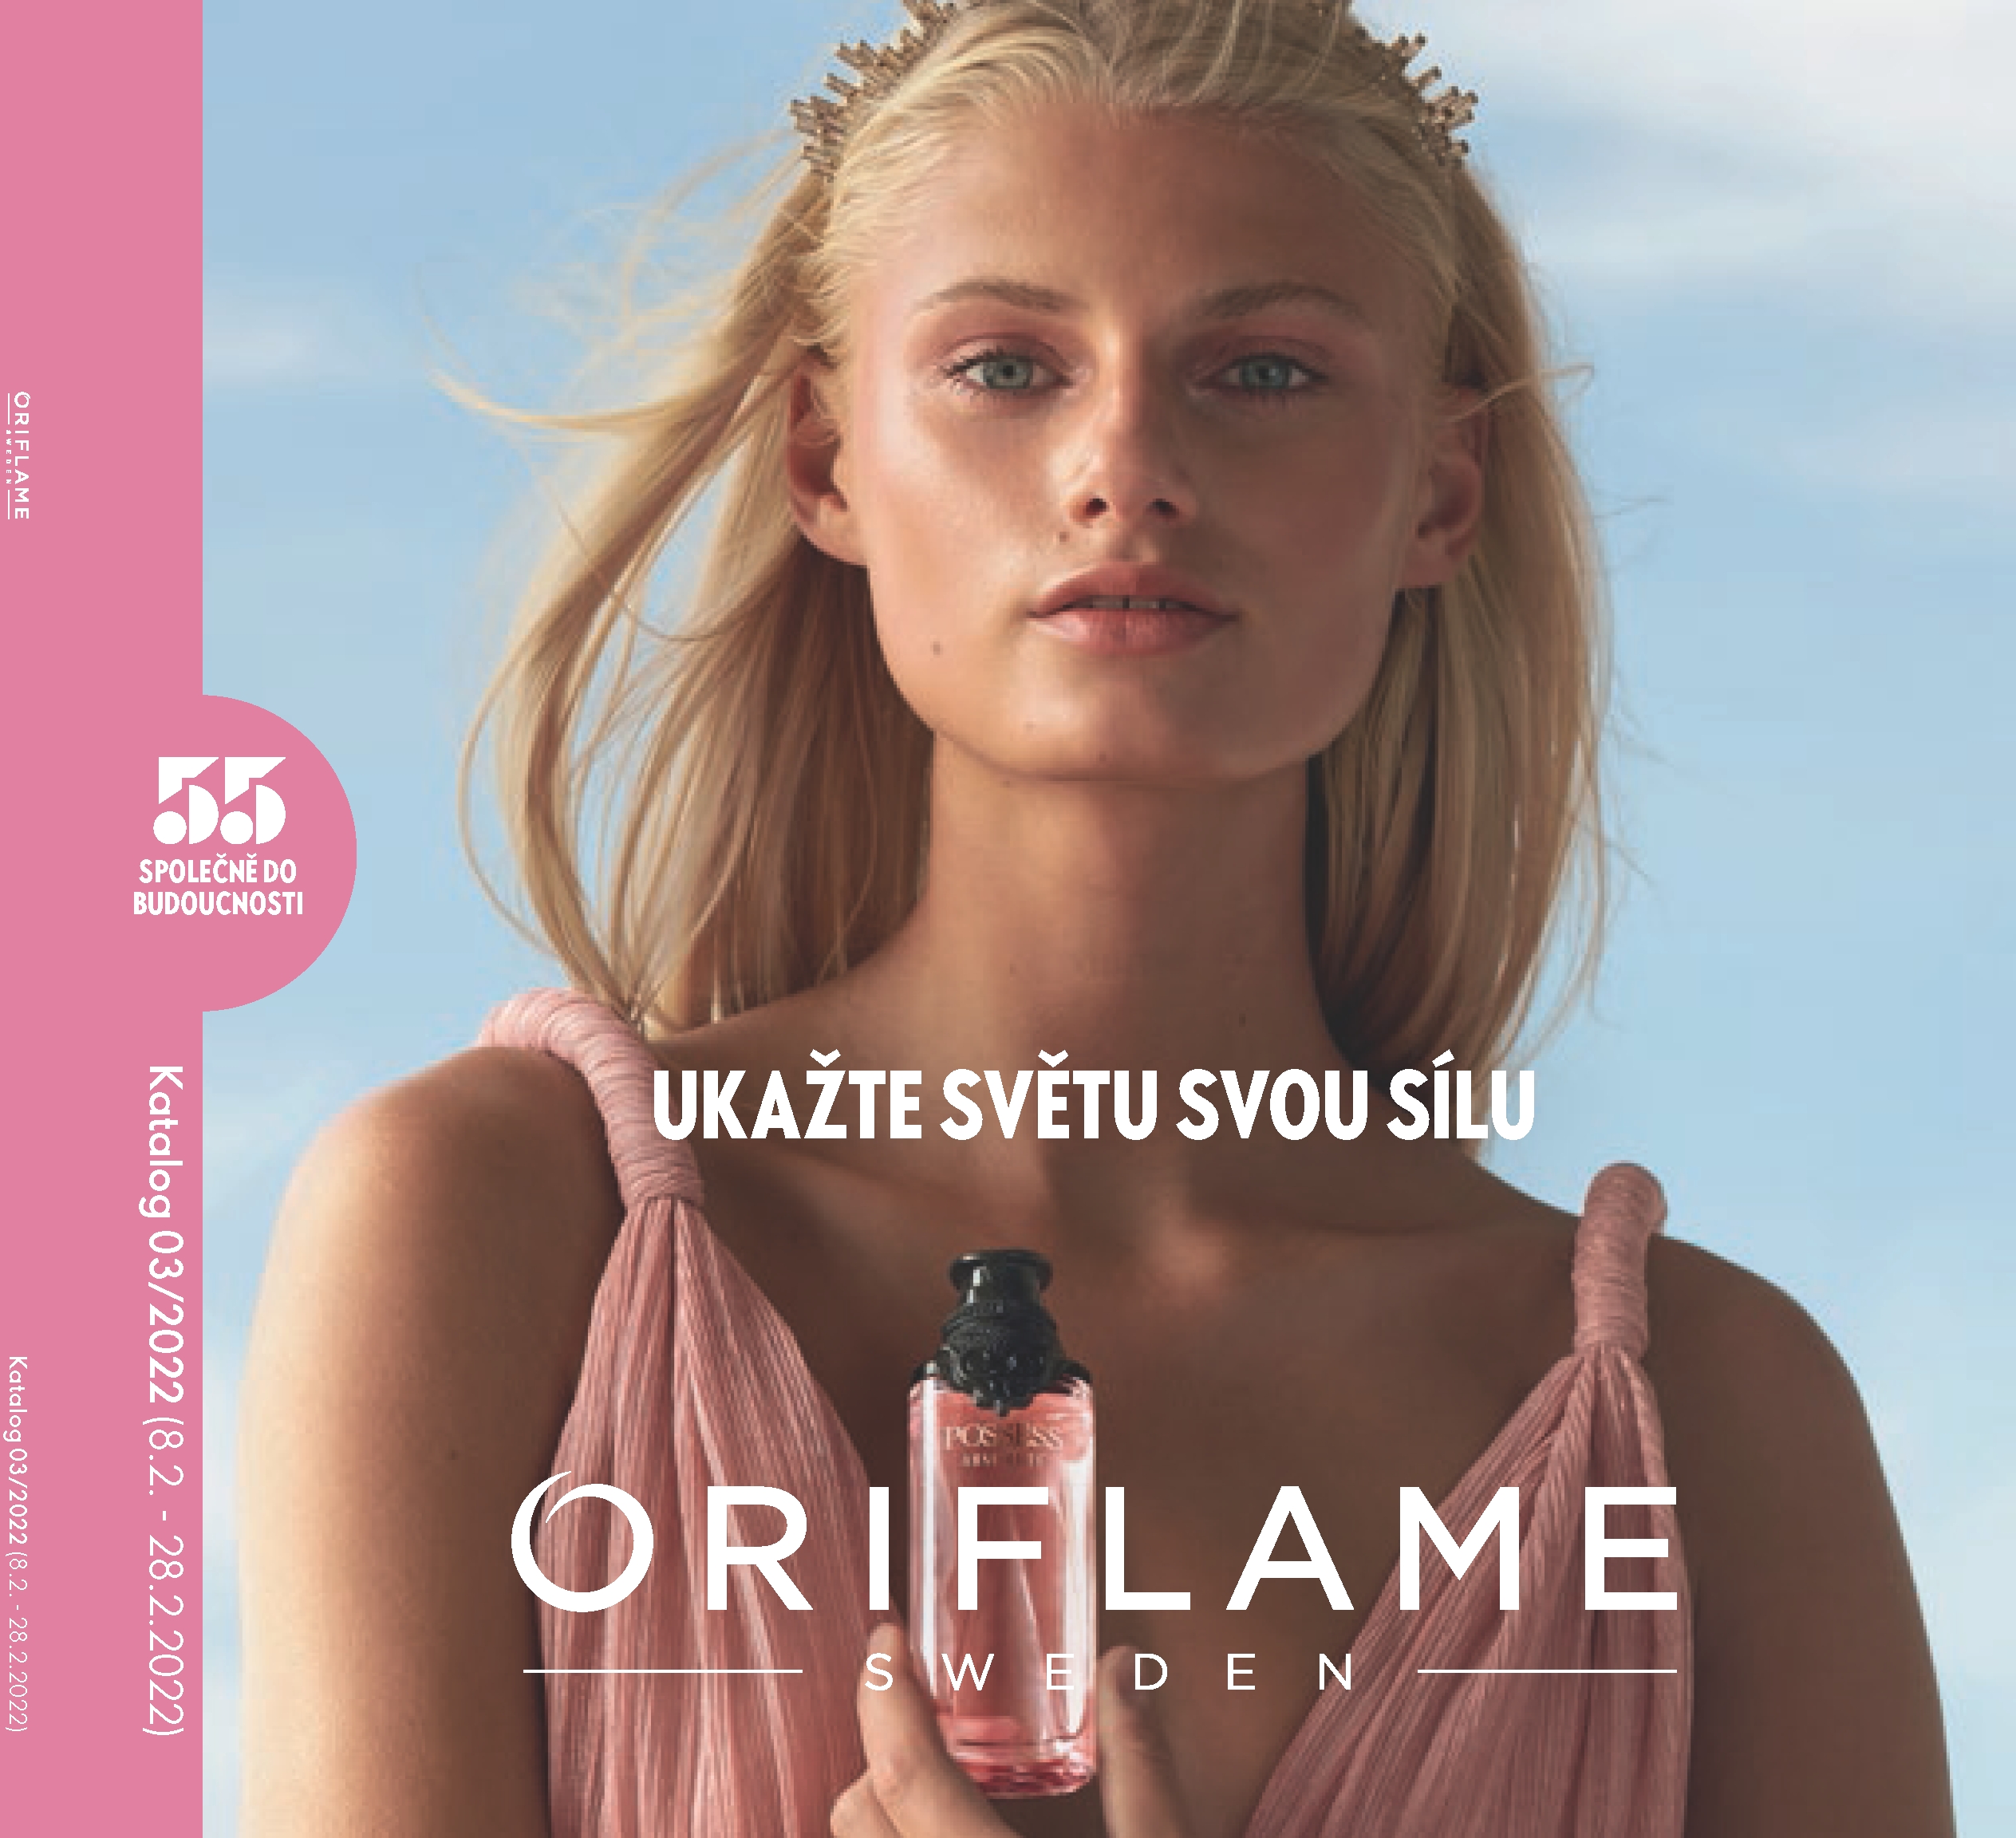 Oriflame katalog 3 oriflame.cz www.oriflame.cz